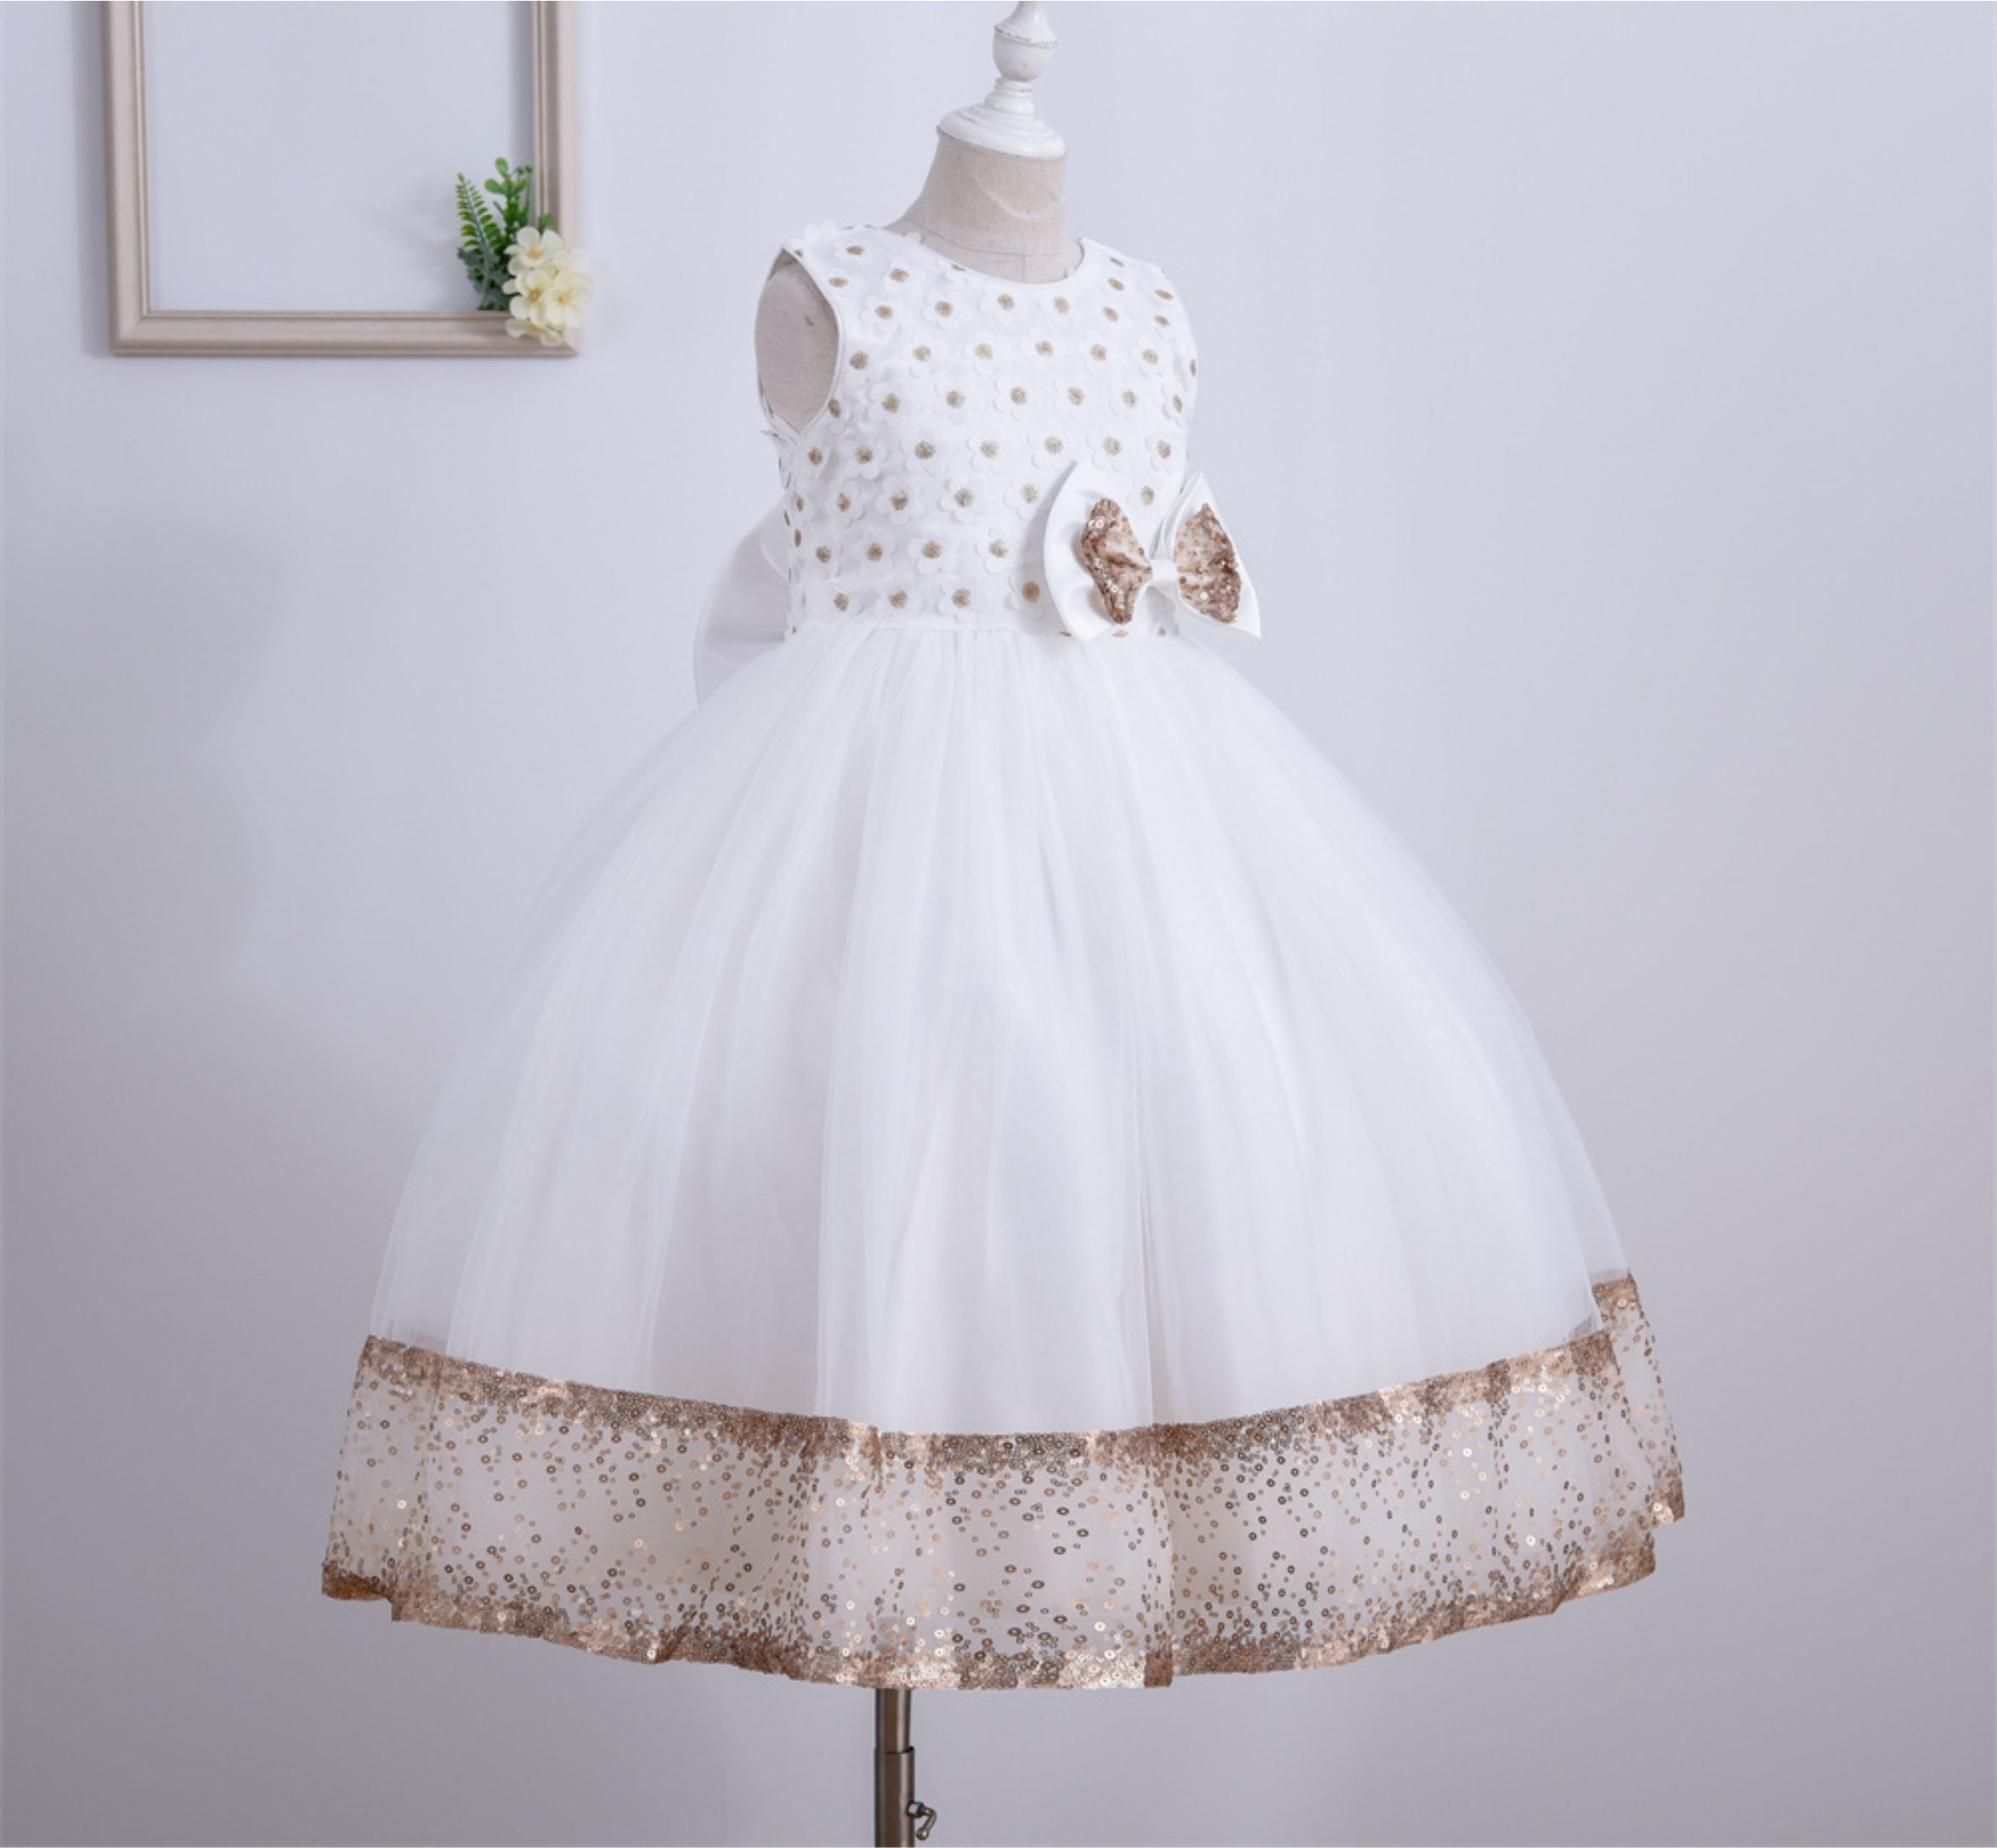 Oshkosh B'gosh Toddler Girls' Lace Dress - White 5t : Target